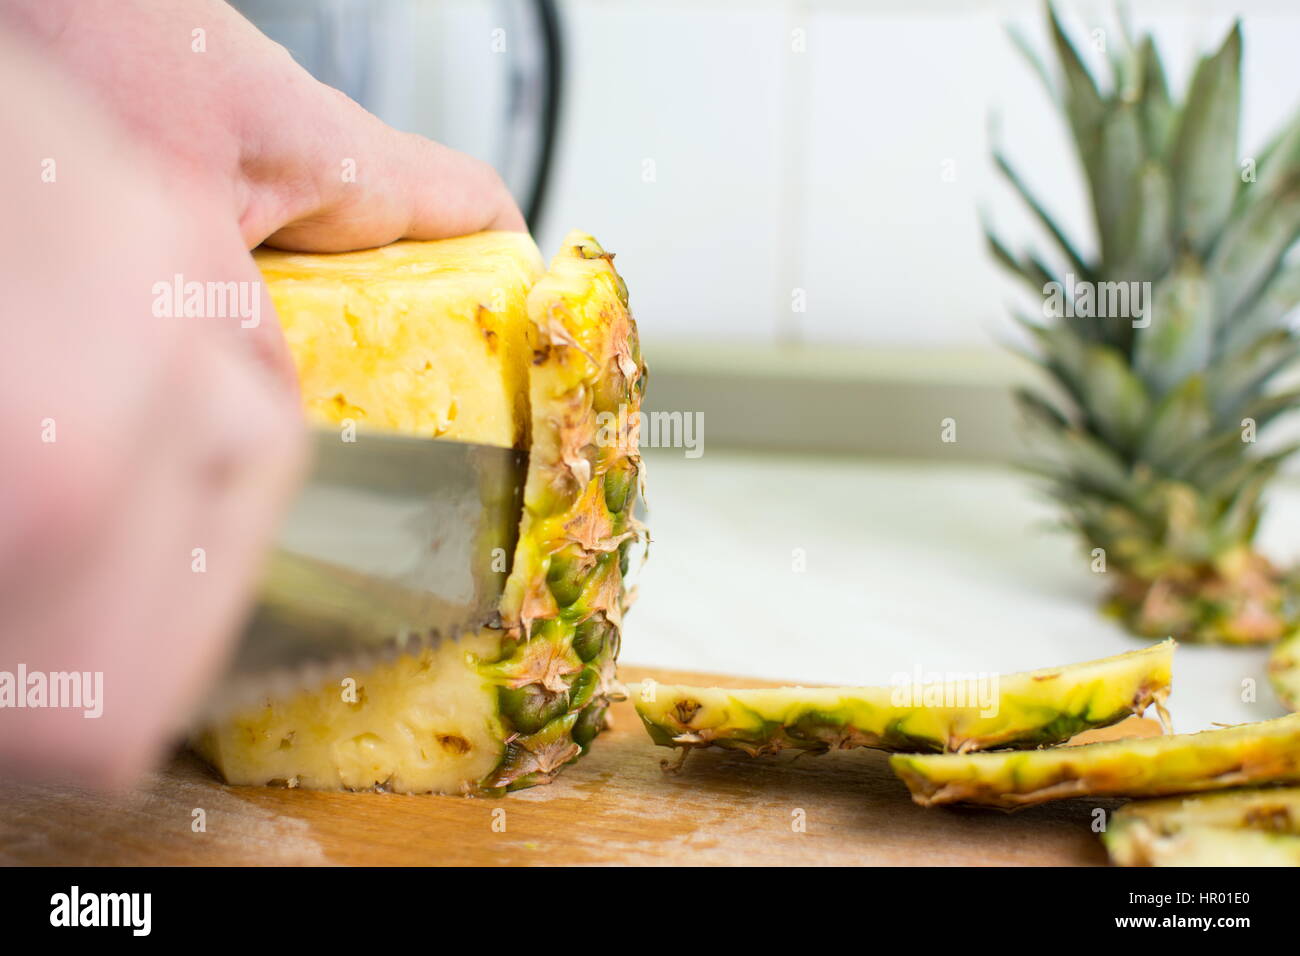 Männliche Hände frische Ananas Haut peeling hautnah Stockfoto